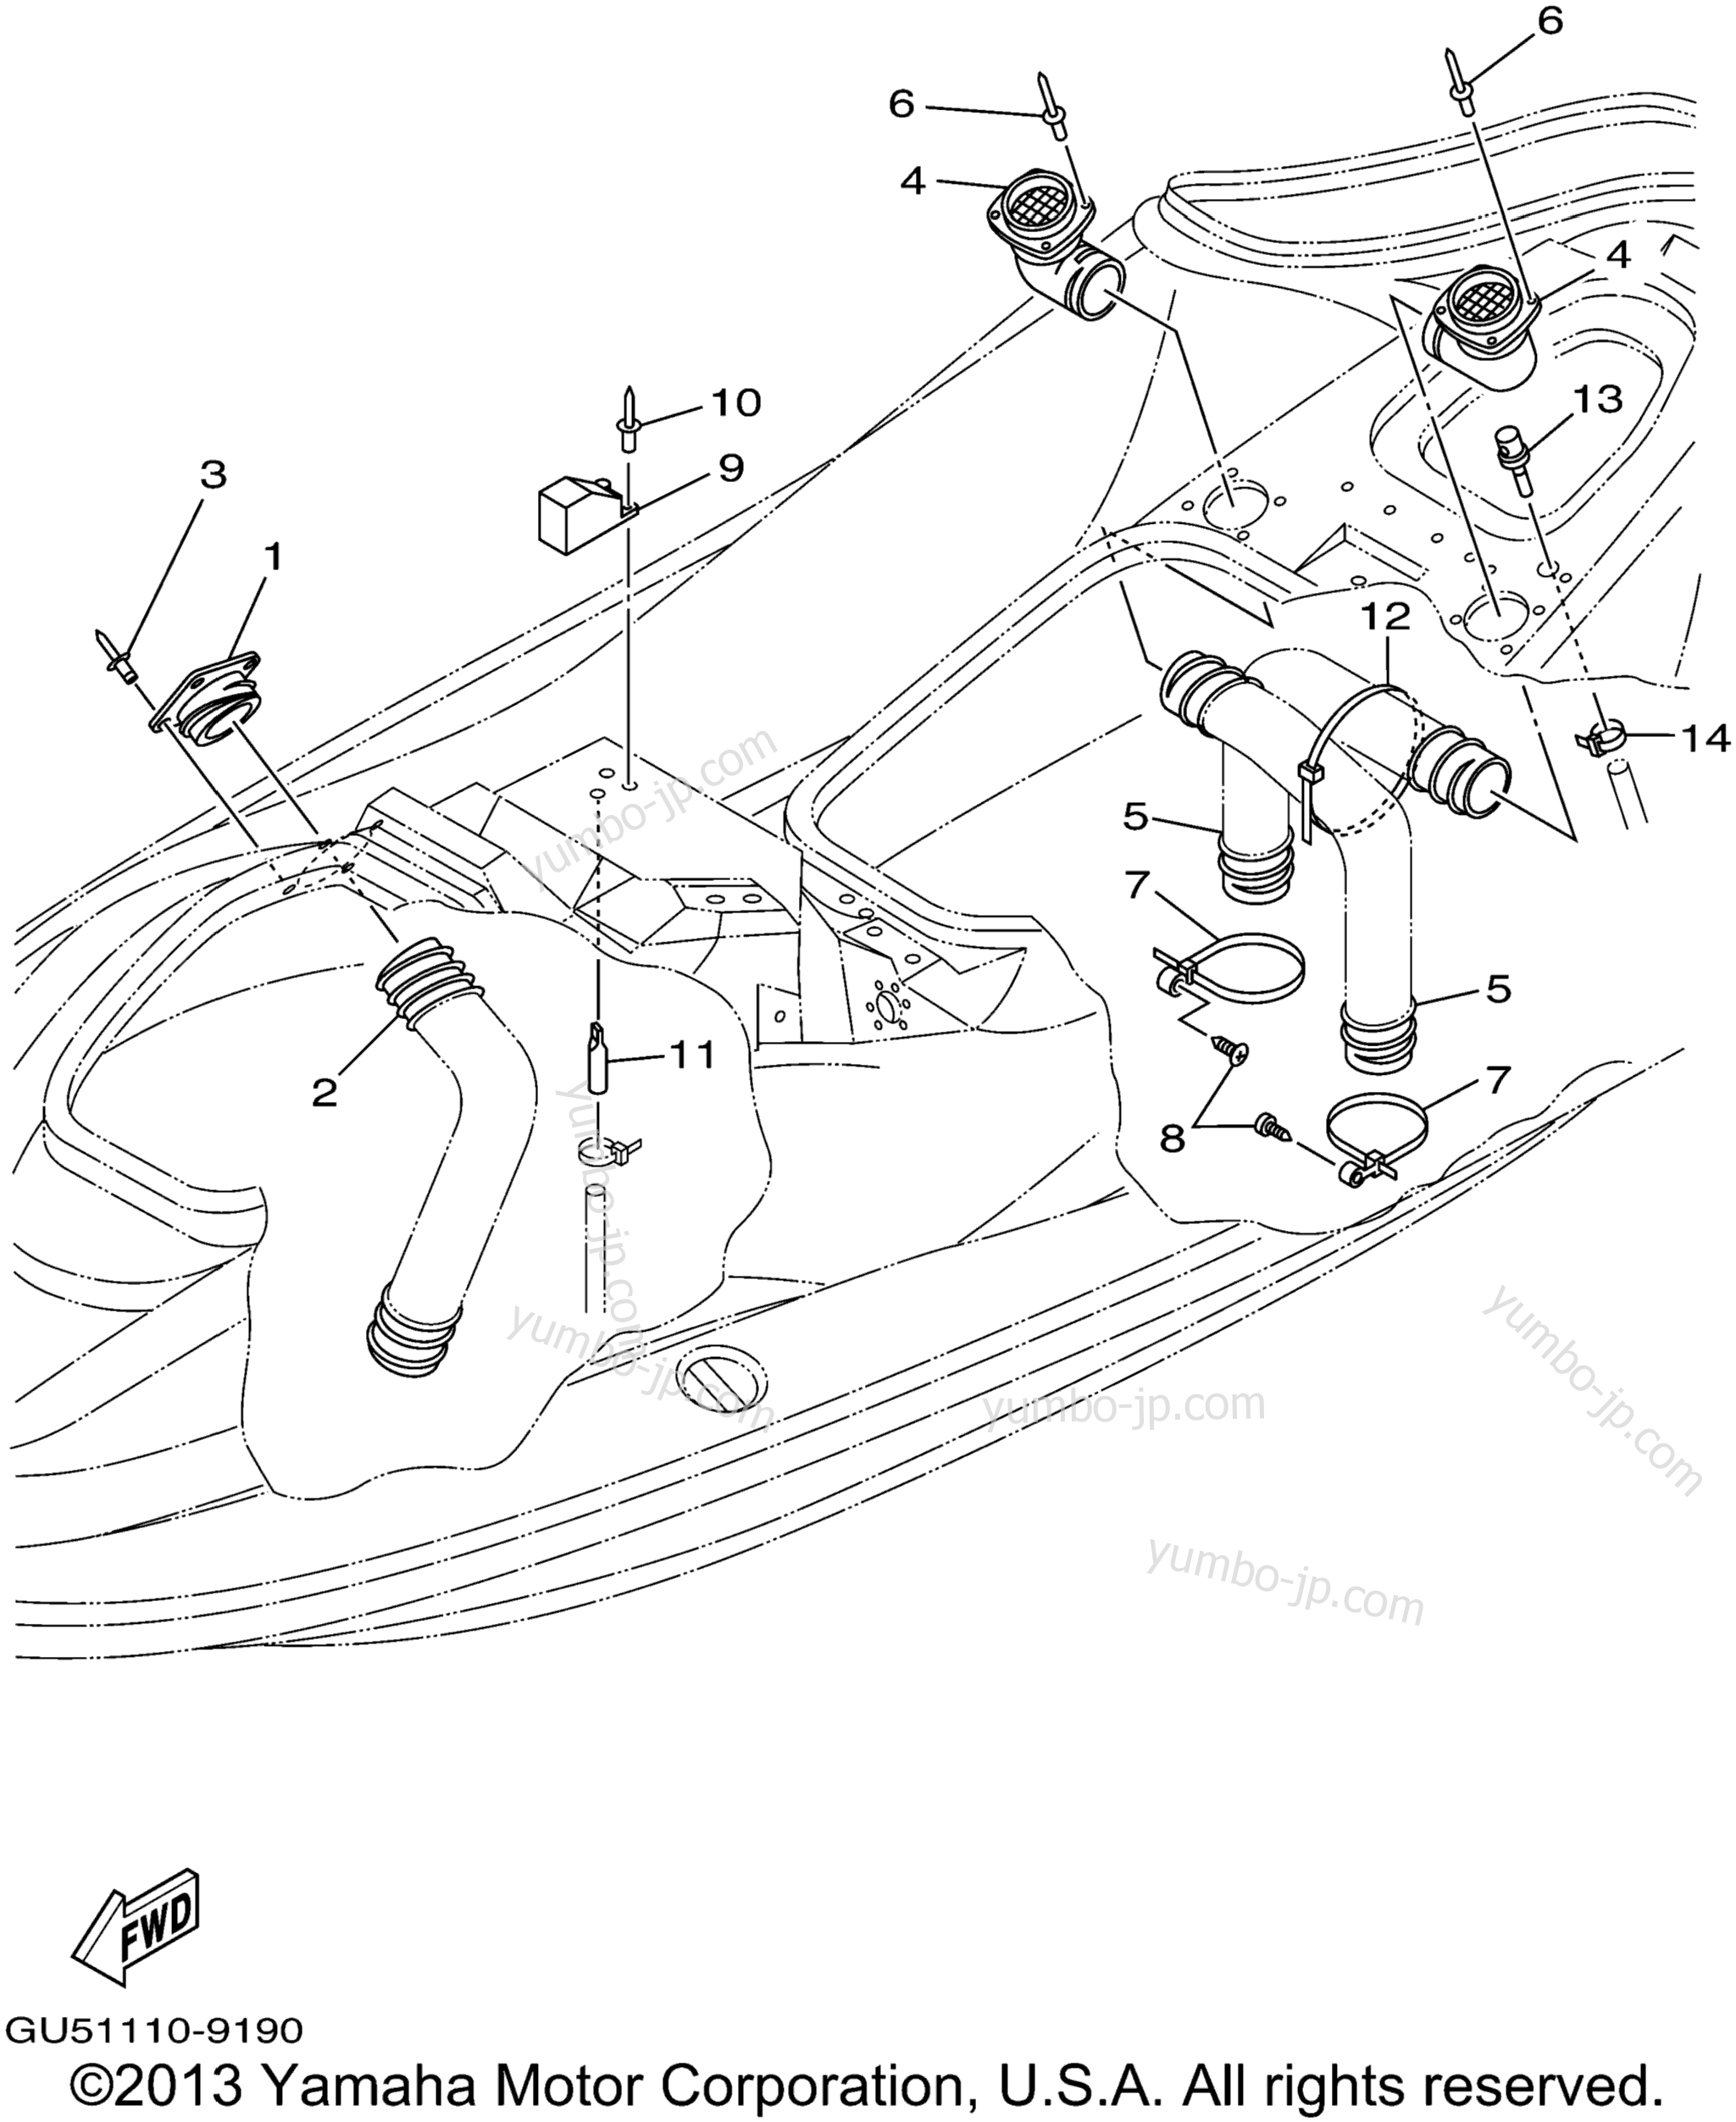 Ventilation для гидроциклов YAMAHA WAVE RUNNER SUV1200 (SV1200X) 1999 г.